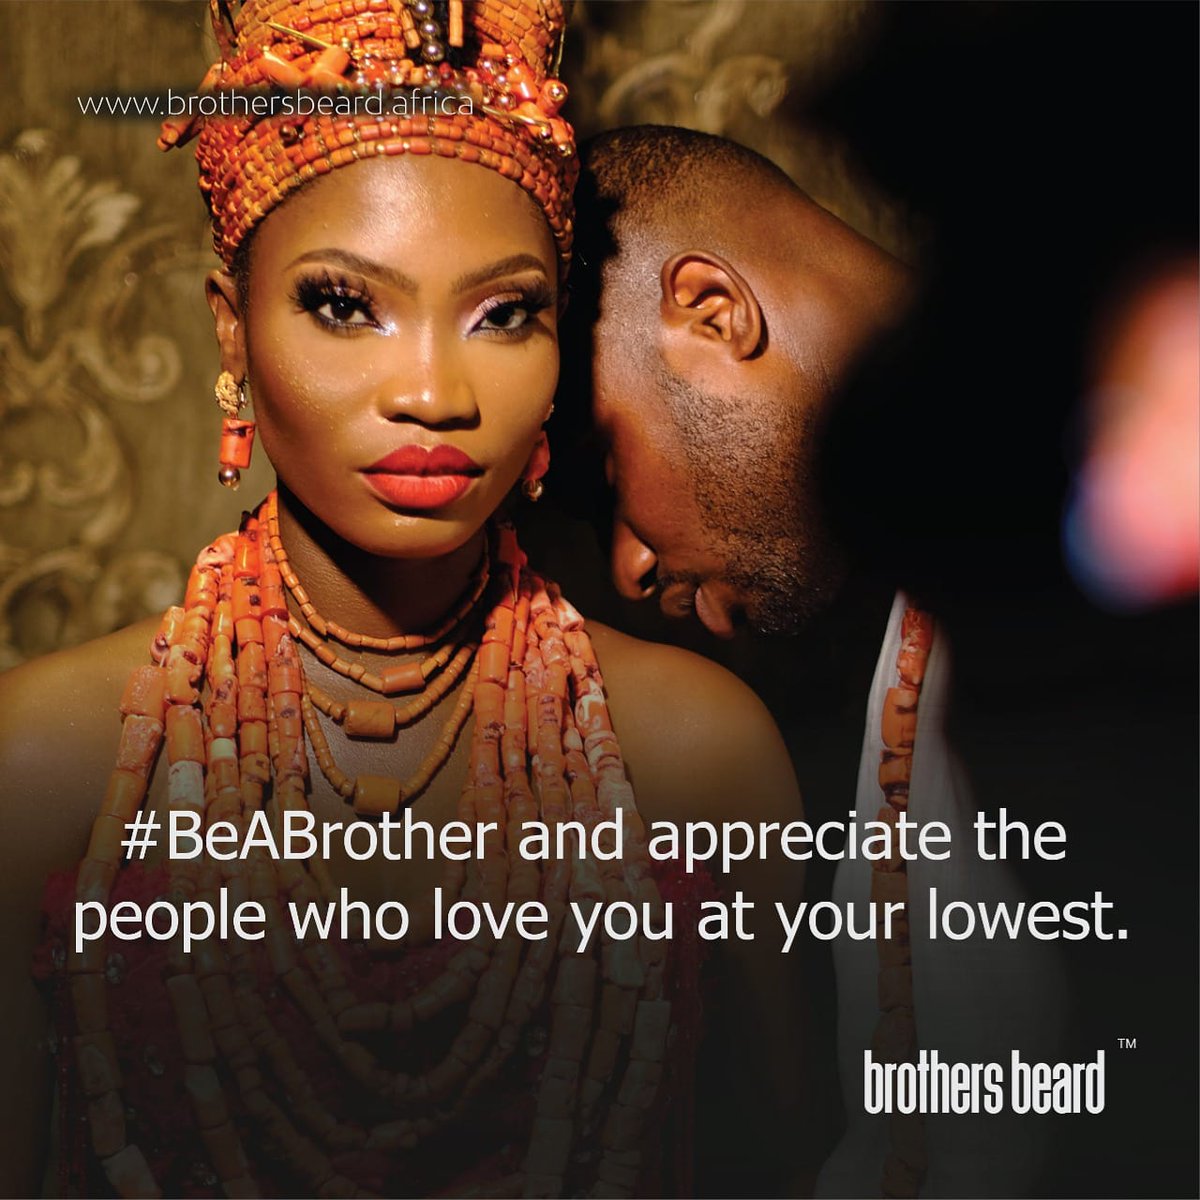 #beabrother #redefiningmanhood #africamonth #brothersbeard  #Africarise #mybrotherskeeper